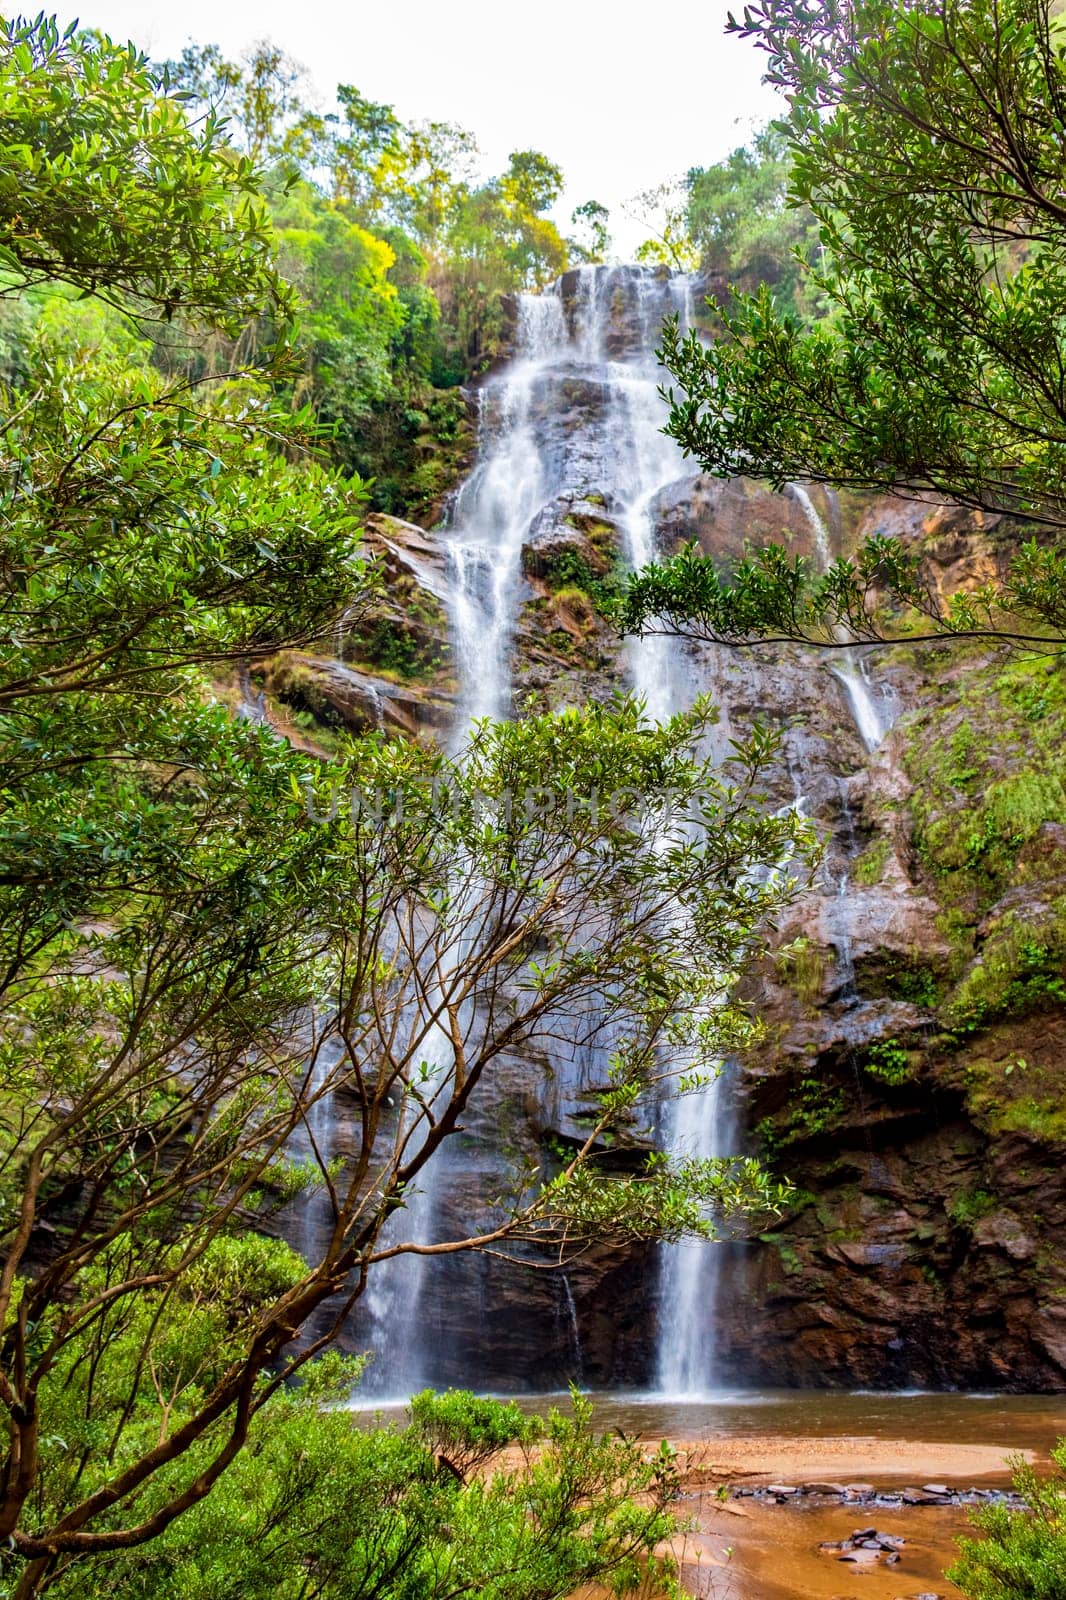 Waterfall seen through the vegetation by Fred_Pinheiro